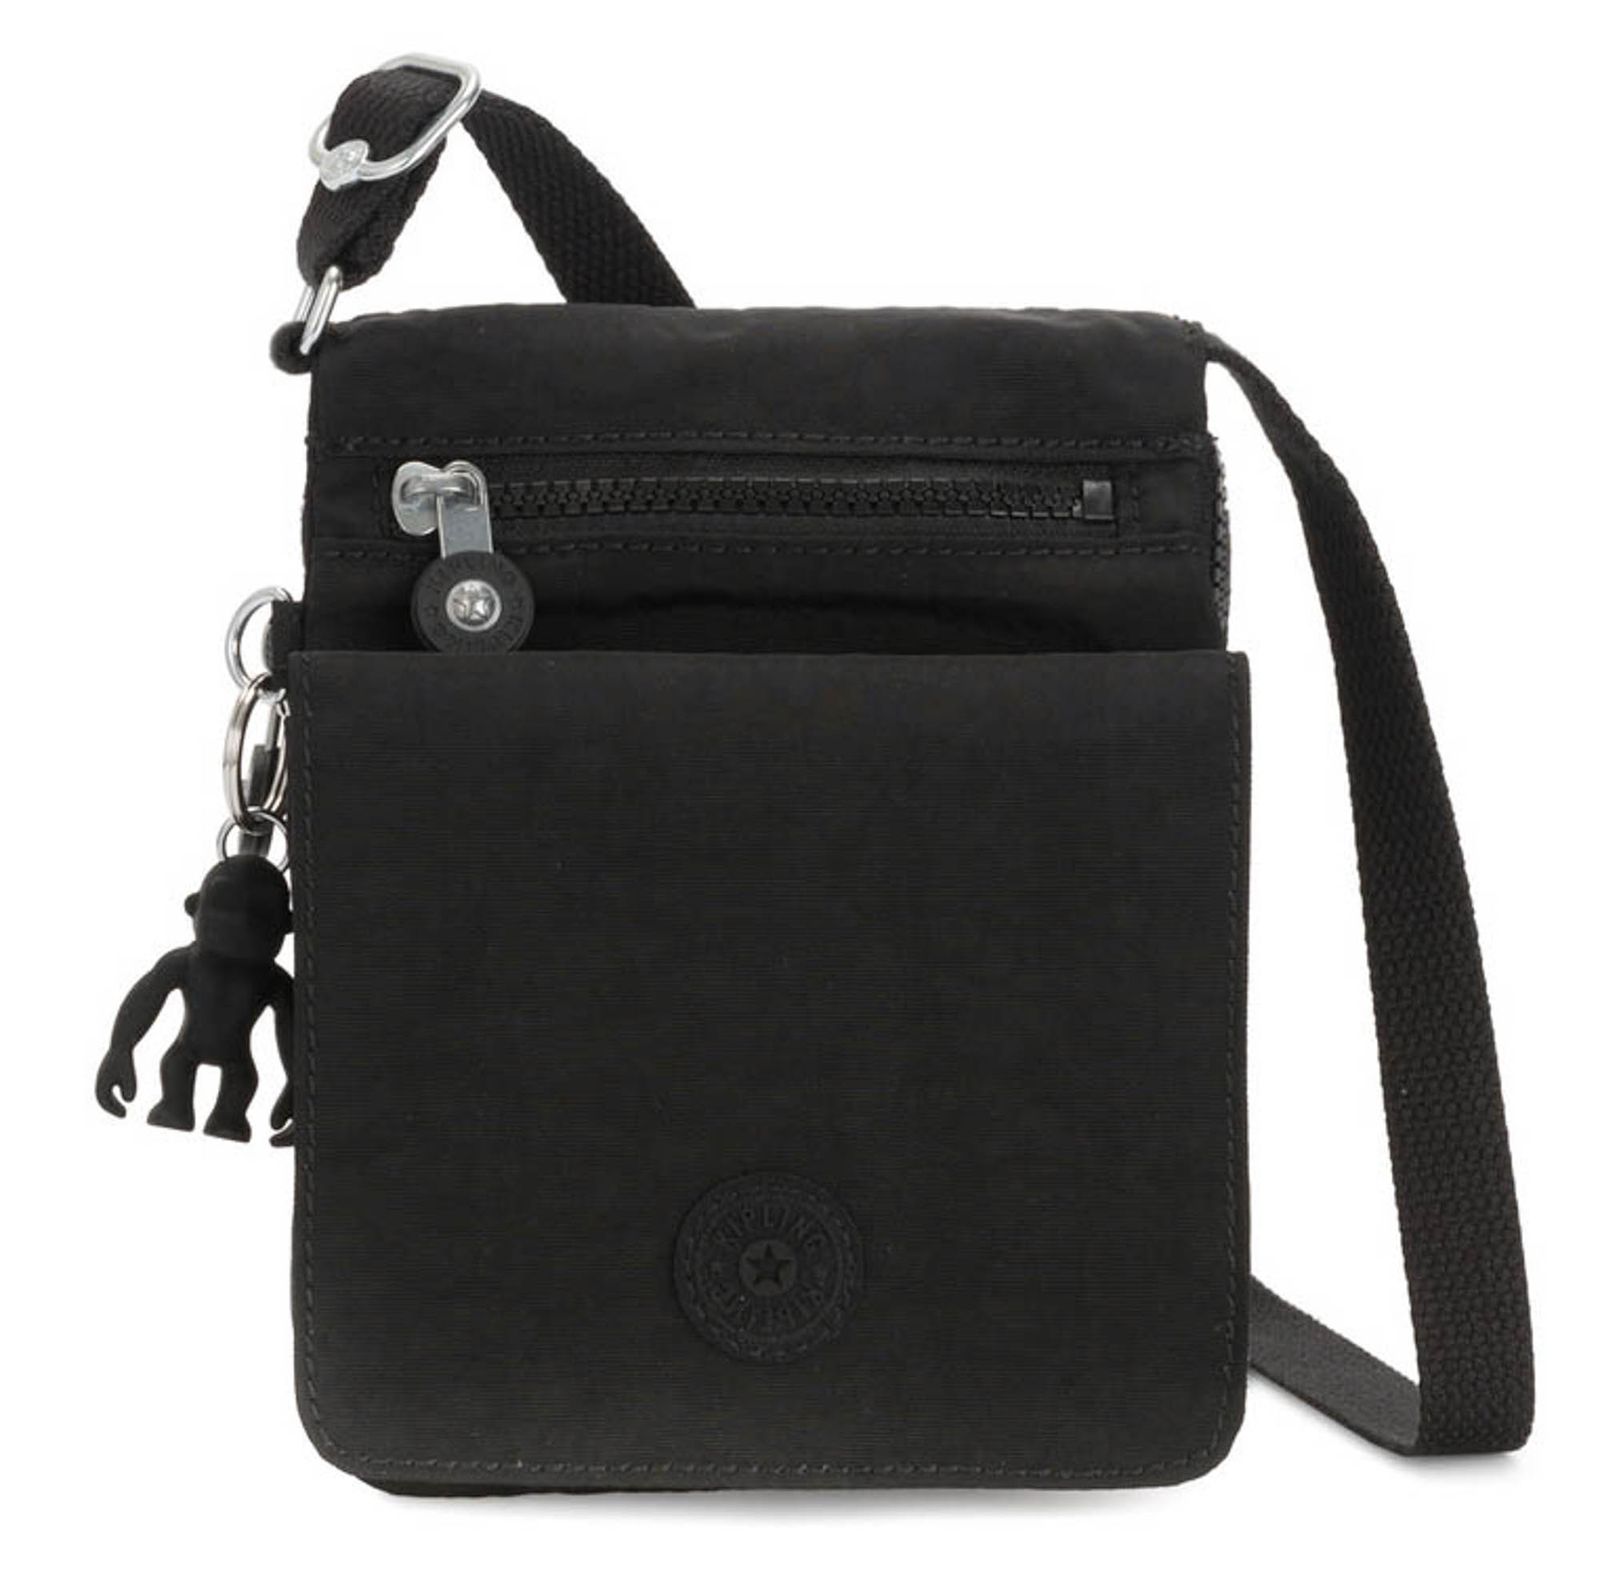 kipling New Eldorado Crossbody Bag S Black Noir Buy bags, purses